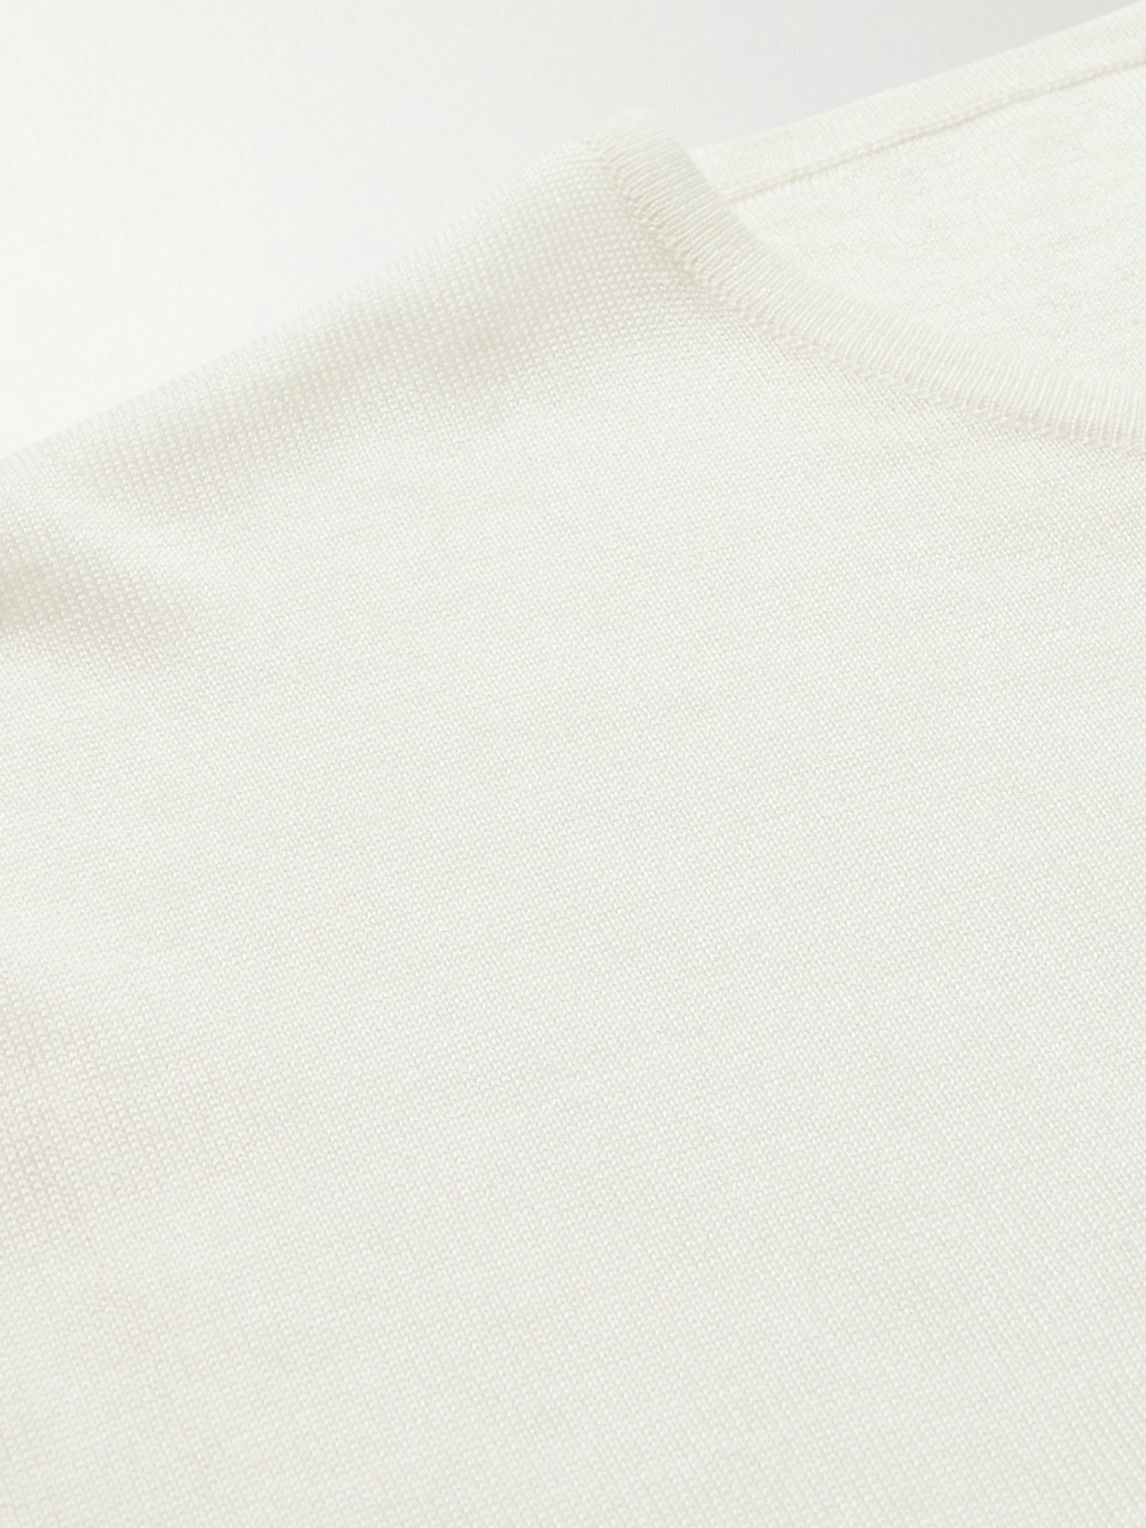 Ghiaia Cashmere - Cashmere and Silk-Blend T-Shirt - White Ghiaia Cashmere